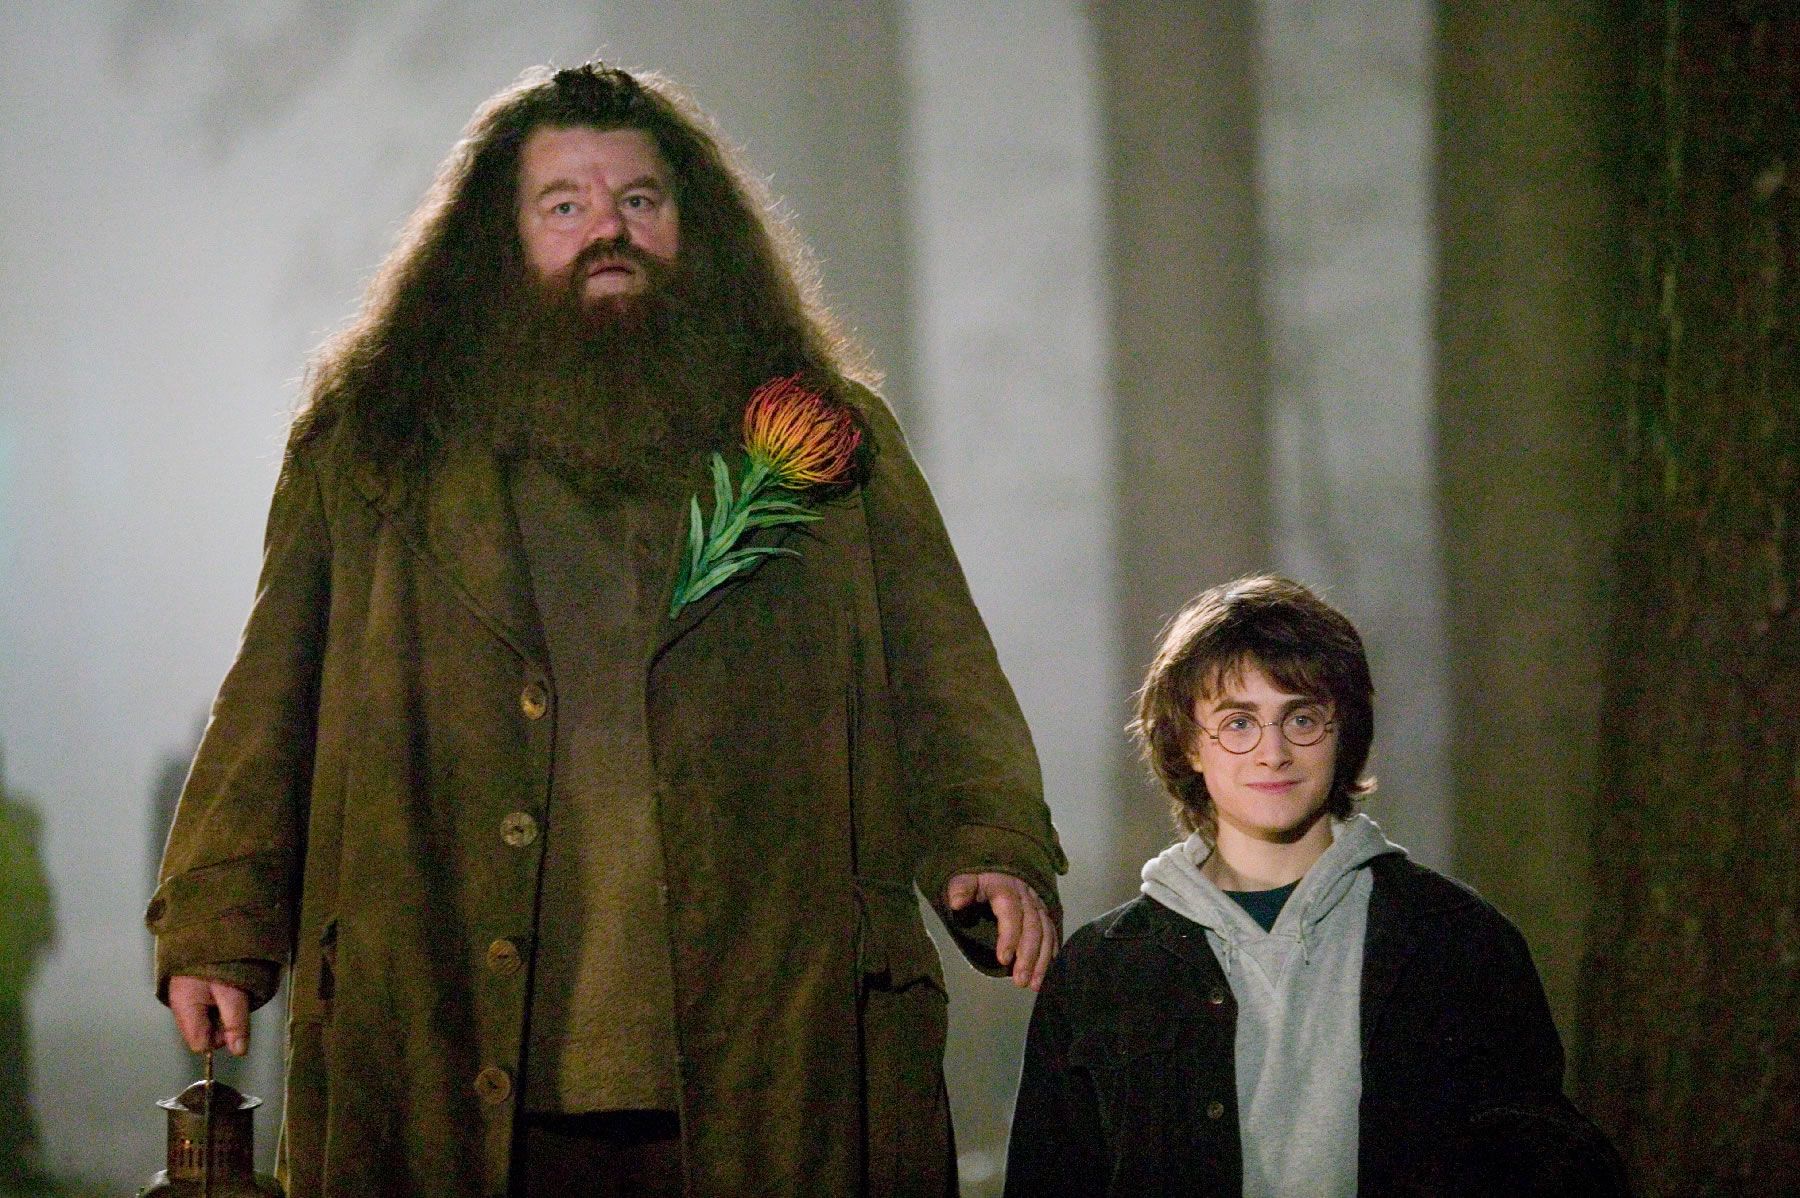 Harry Potter 20 Strange Details About Hagrid’s Anatomy